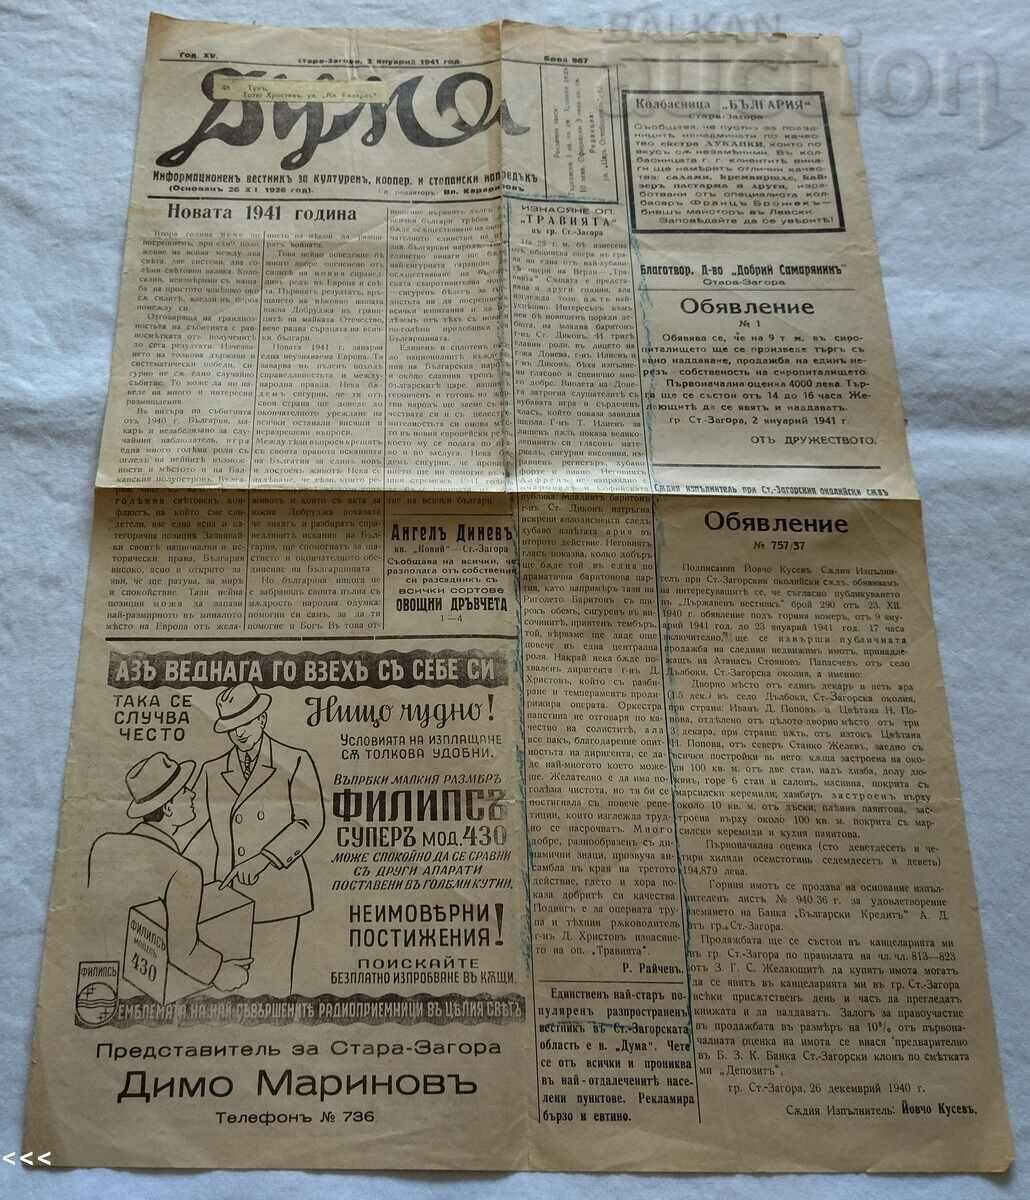 V-K "DUMA" STAR ZAGORA NUMĂRUL № 967 1941 PUBLICITATE PHILIPS